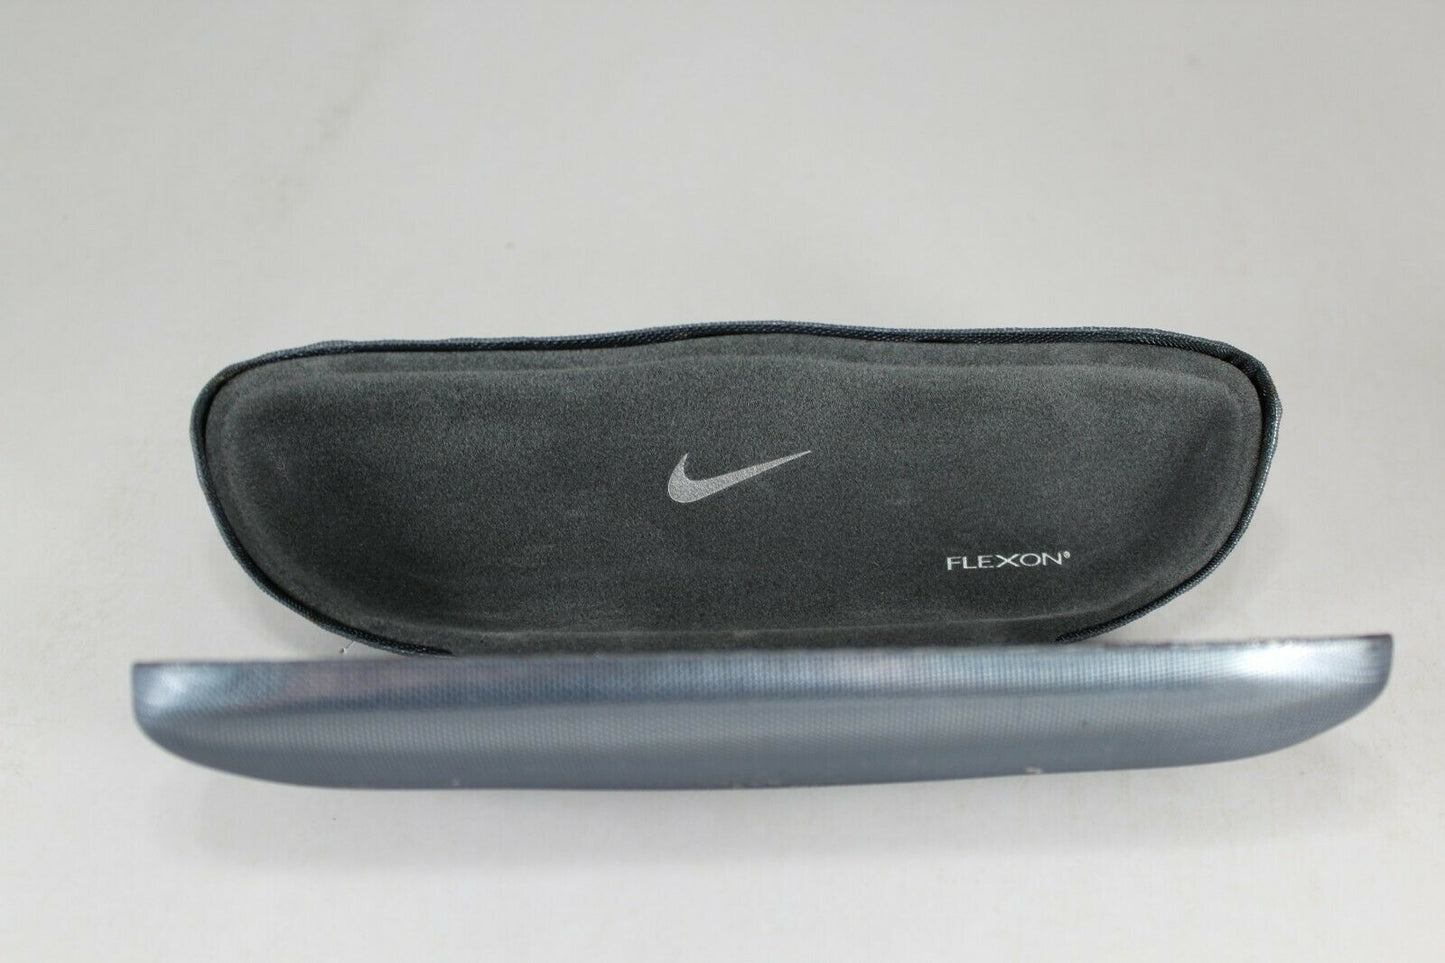 Nike UNREST EV0922 SE-063 57mm New Sunglasses